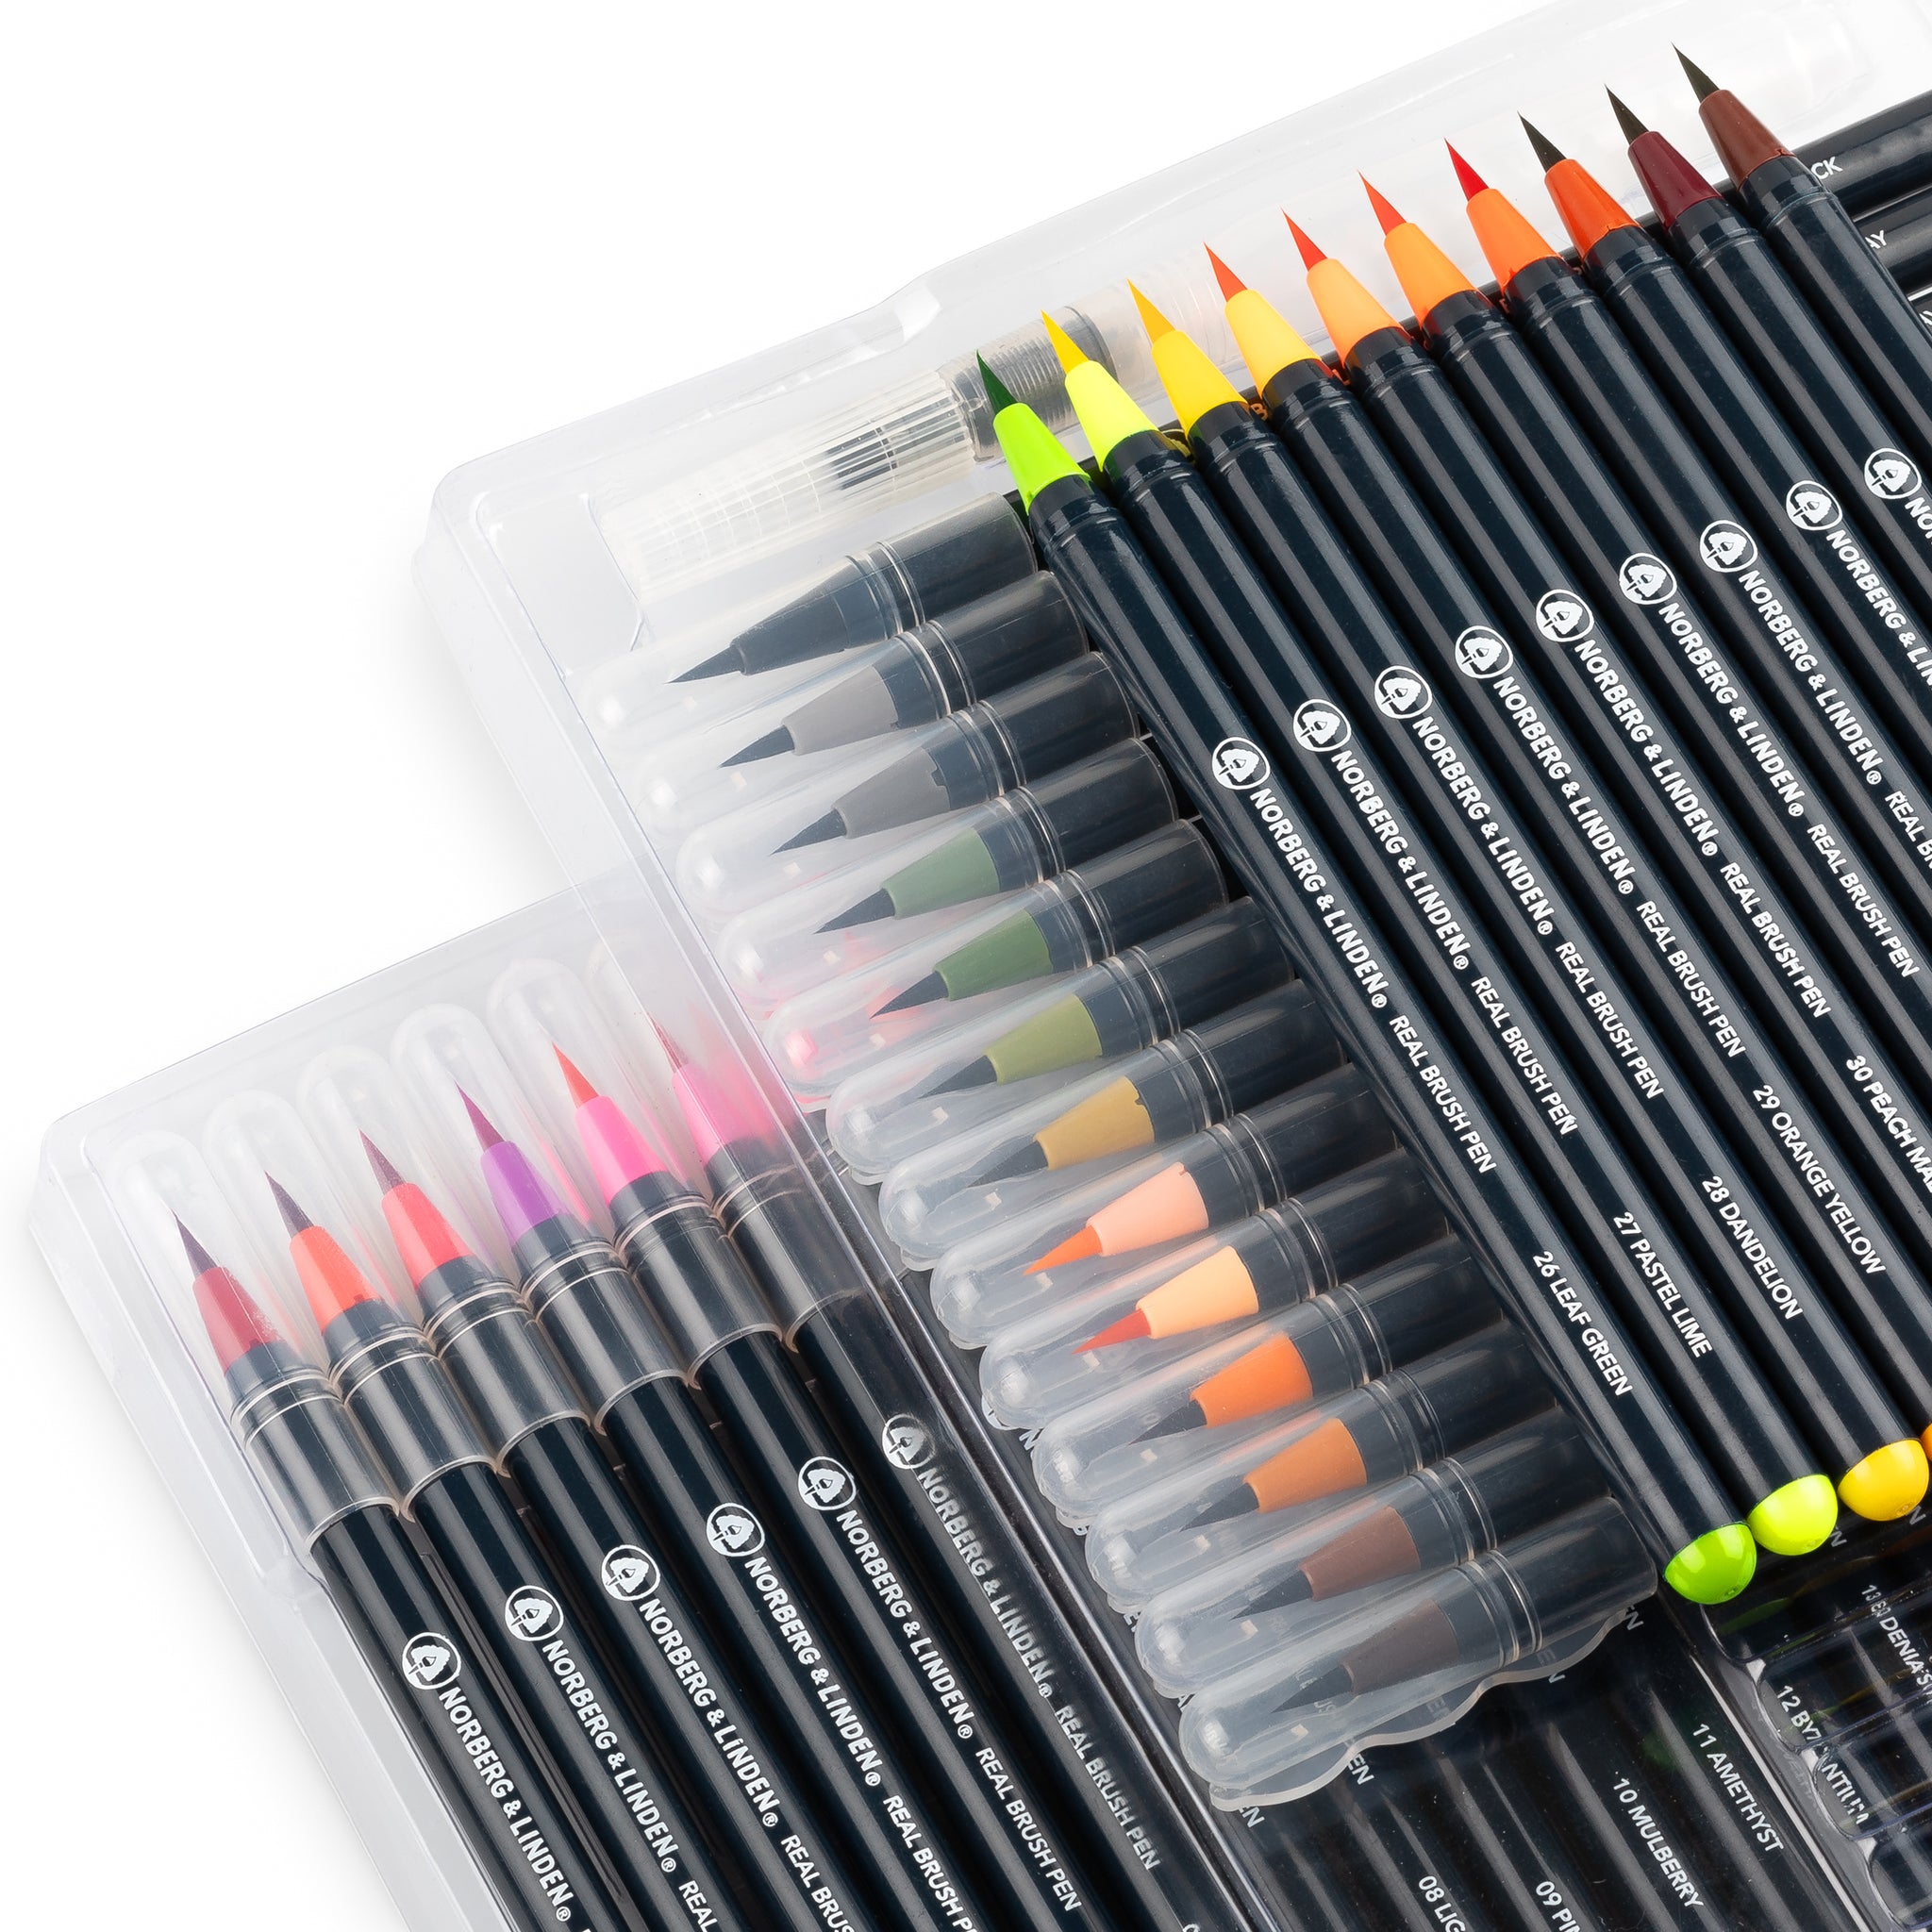 Watercolor Brush Pen Set - Dainayw